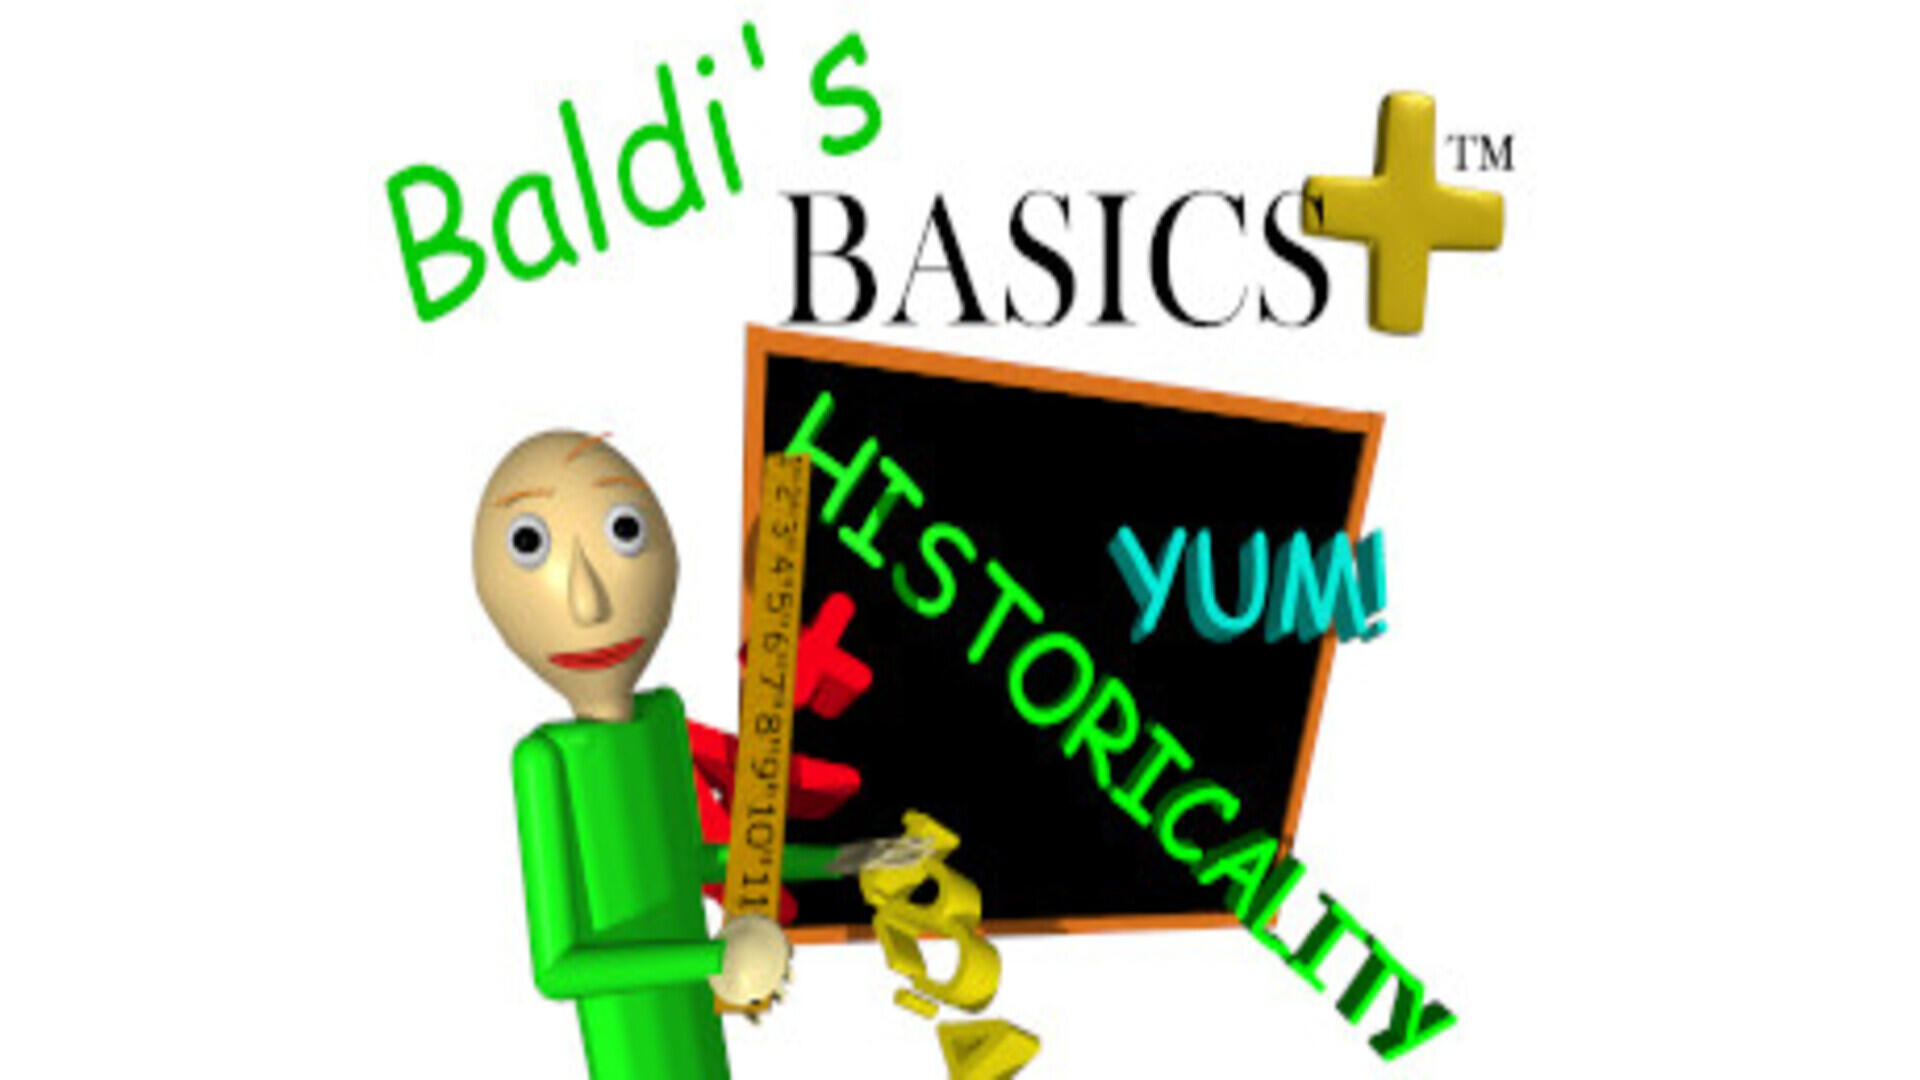 Baldi’s Basics Plus – Free Download ( v0.3.8 )